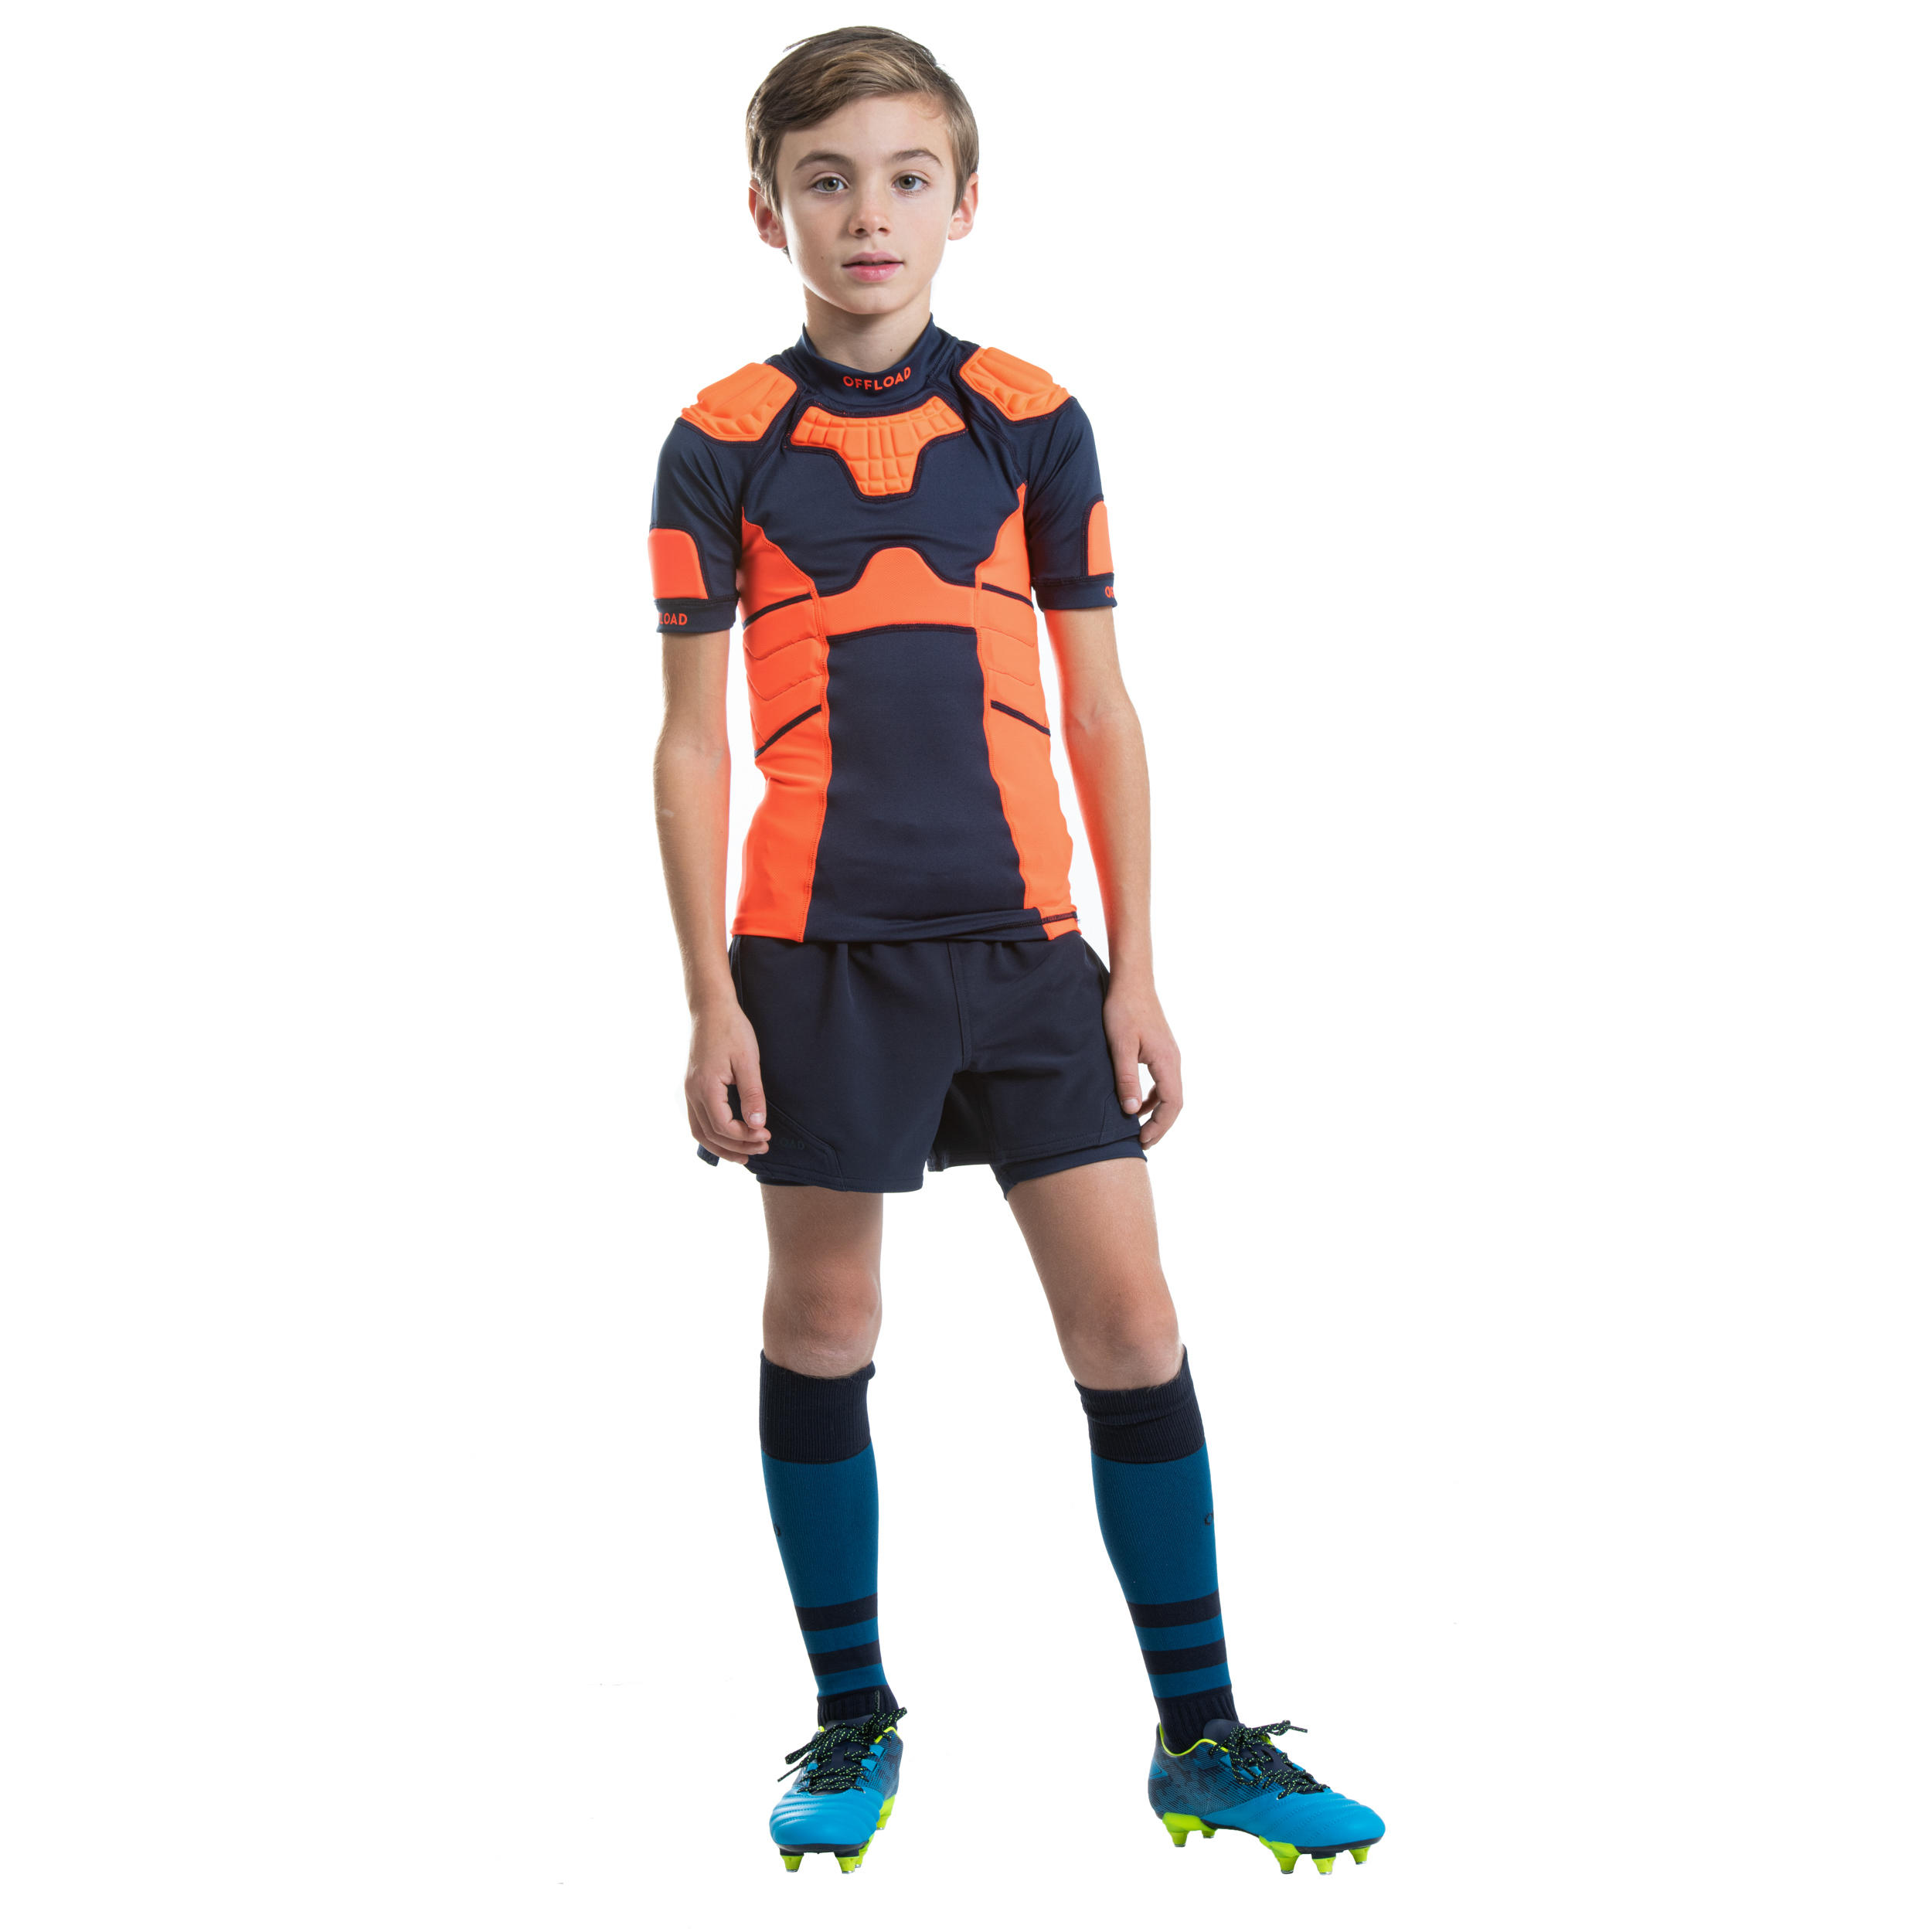 Kids' Rugby Shoulder Pad R500 - Orange 9/13